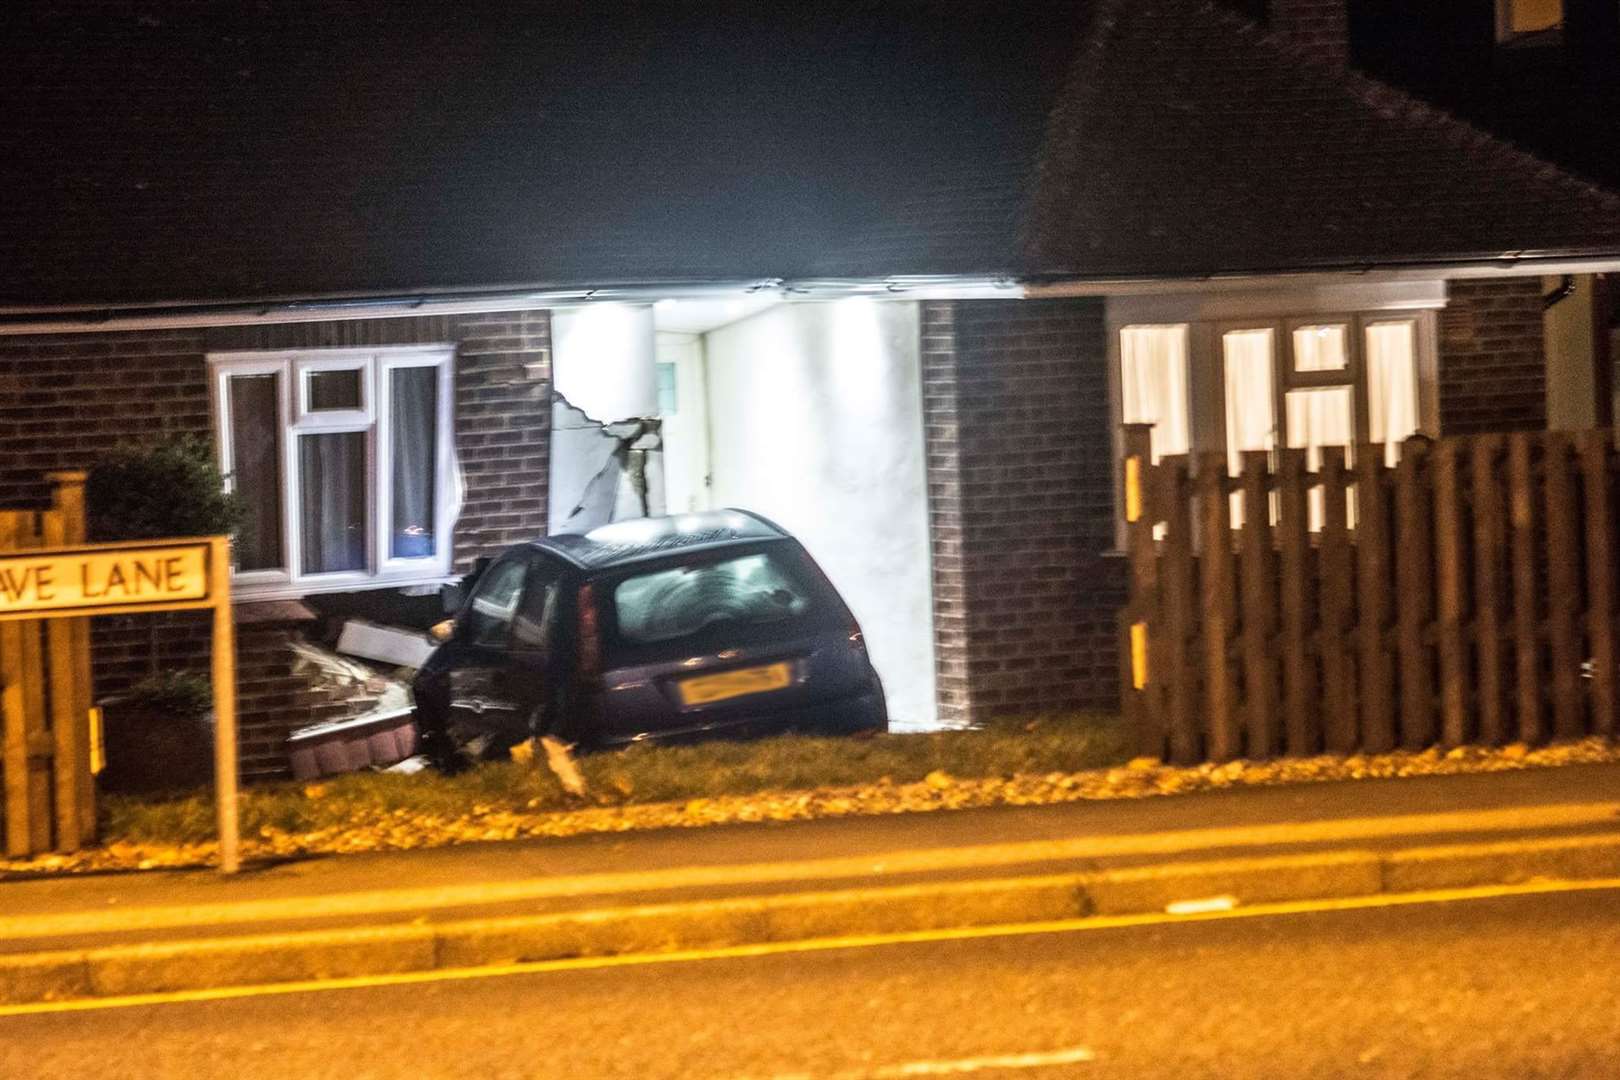 The scene of Friday's night's crash in Berengrave Lane, Rainham